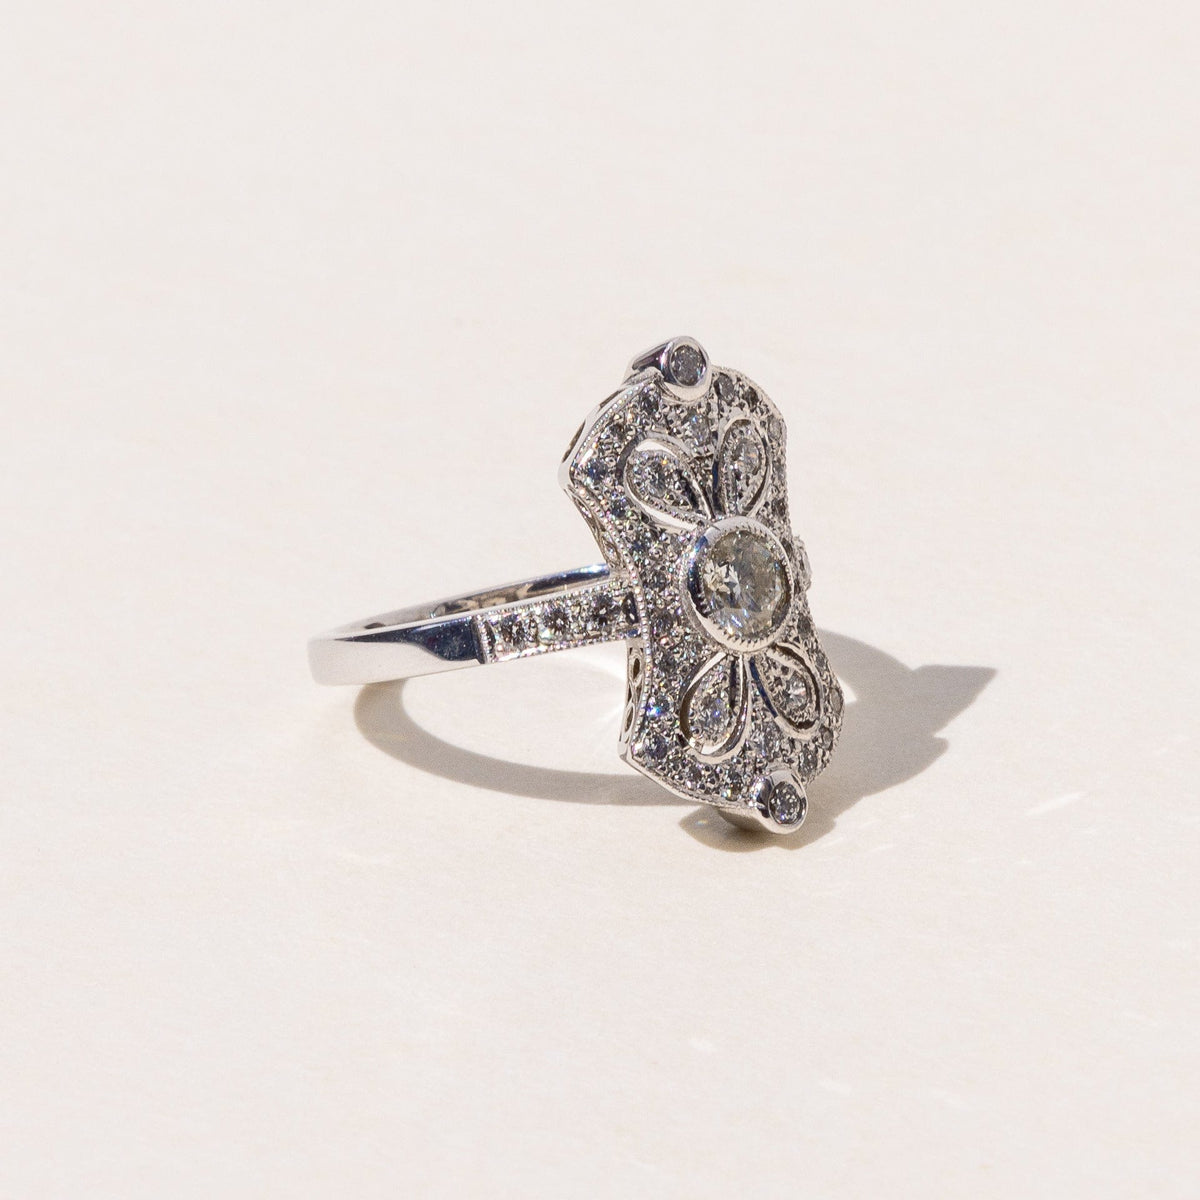 Bespoke White Gold and Diamond Art Deco Ring